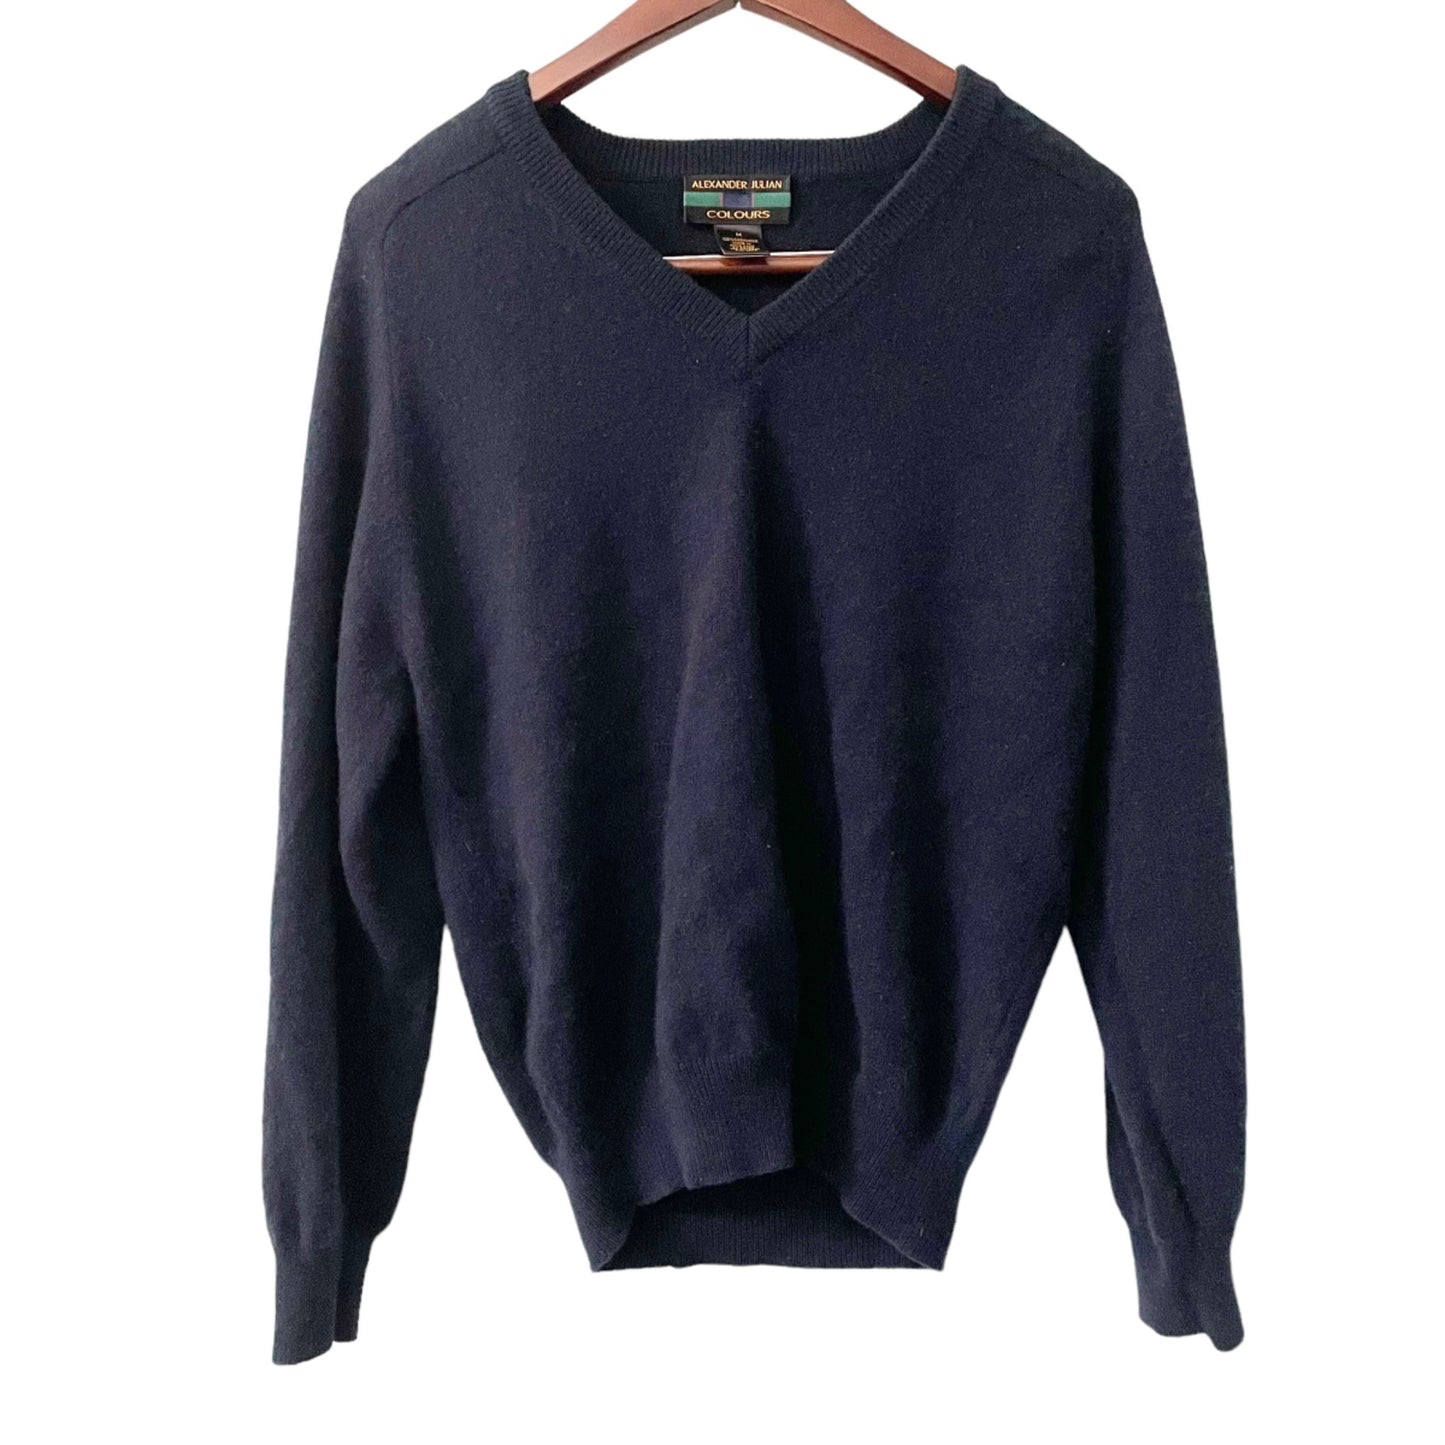 Vintage Alexander Julian Colours Blue 100% Cashmere V-Neck Sweater Men's Medium